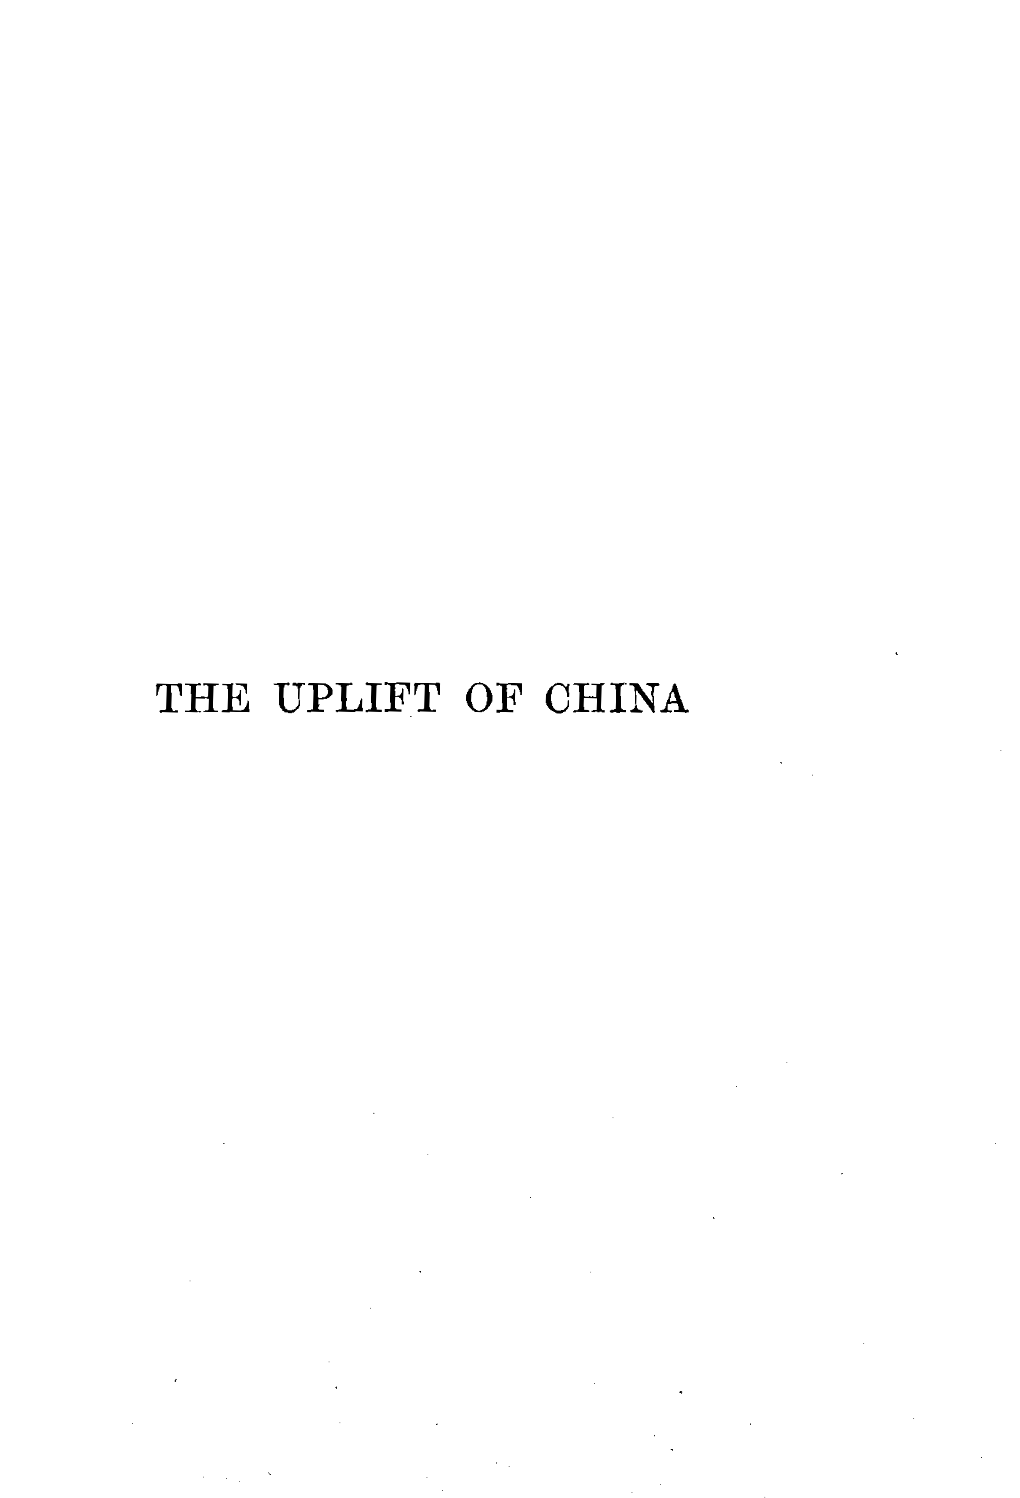 The Uplift of China the Uplift of ·China